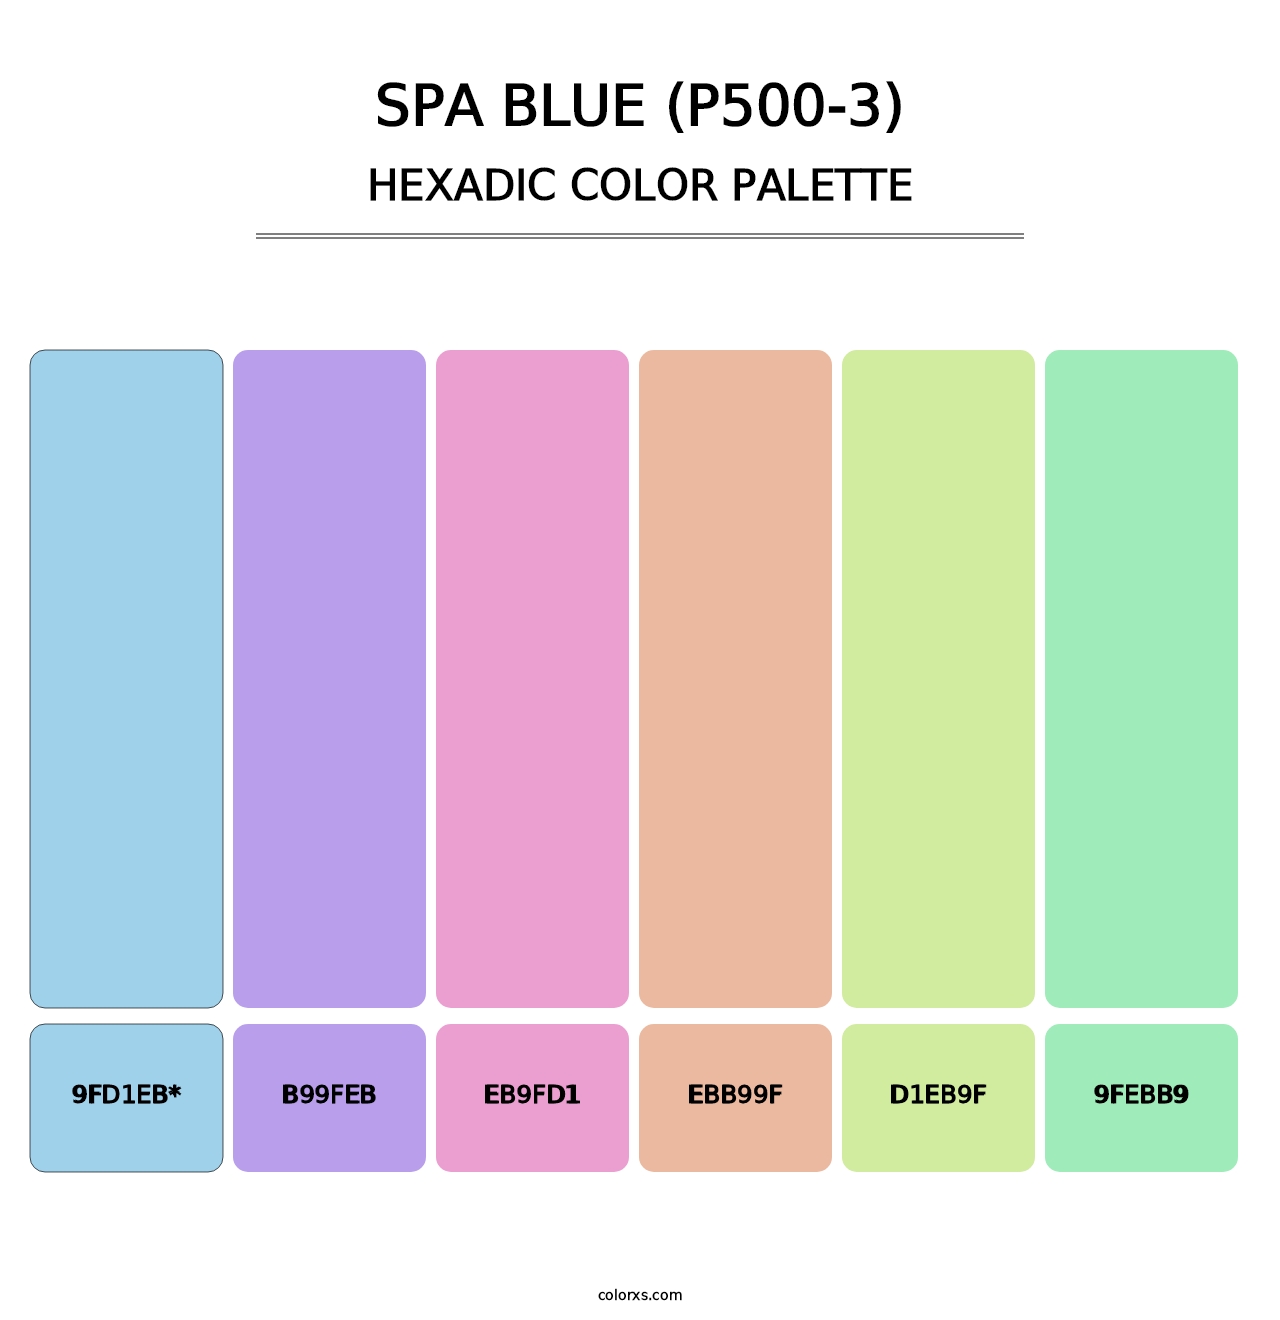 Spa Blue (P500-3) - Hexadic Color Palette